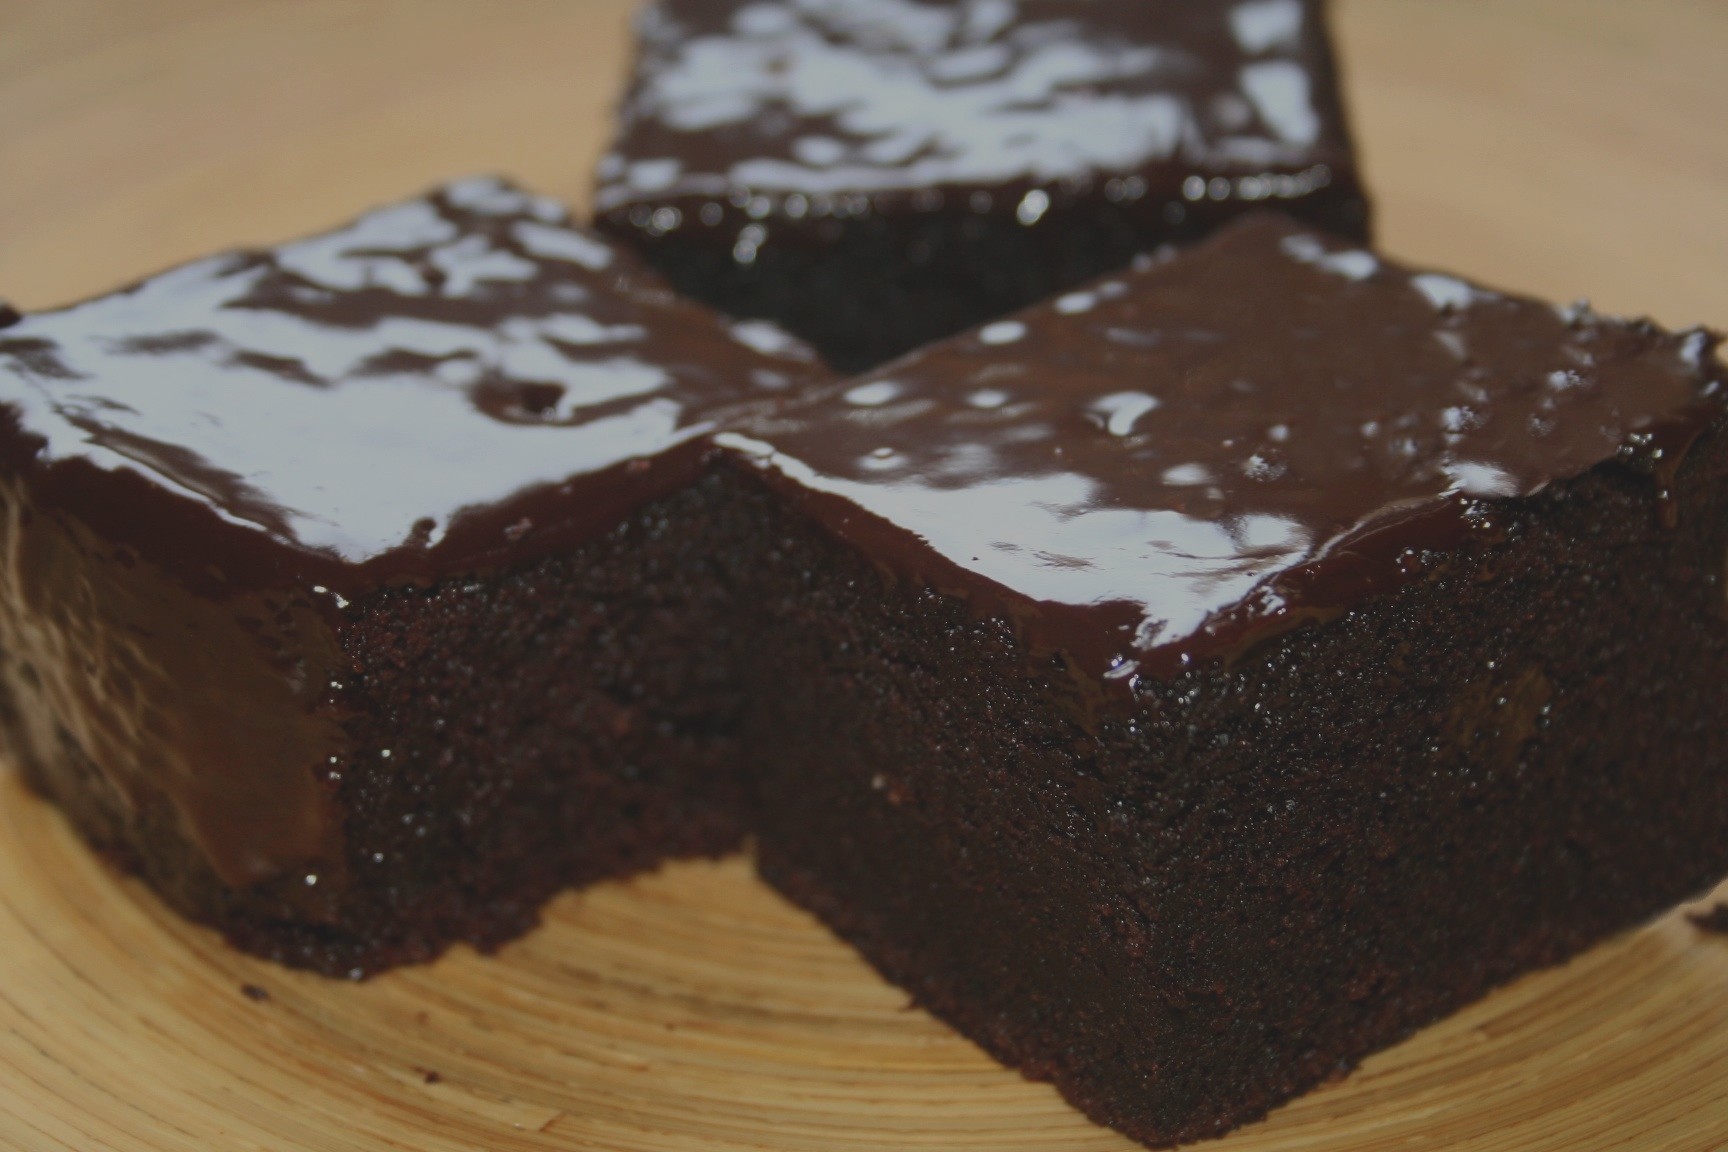 Hearing Belong click עוגת שוקולד הקסם השחור - חלבית תבשילים וחלומות - מרגישים בבית